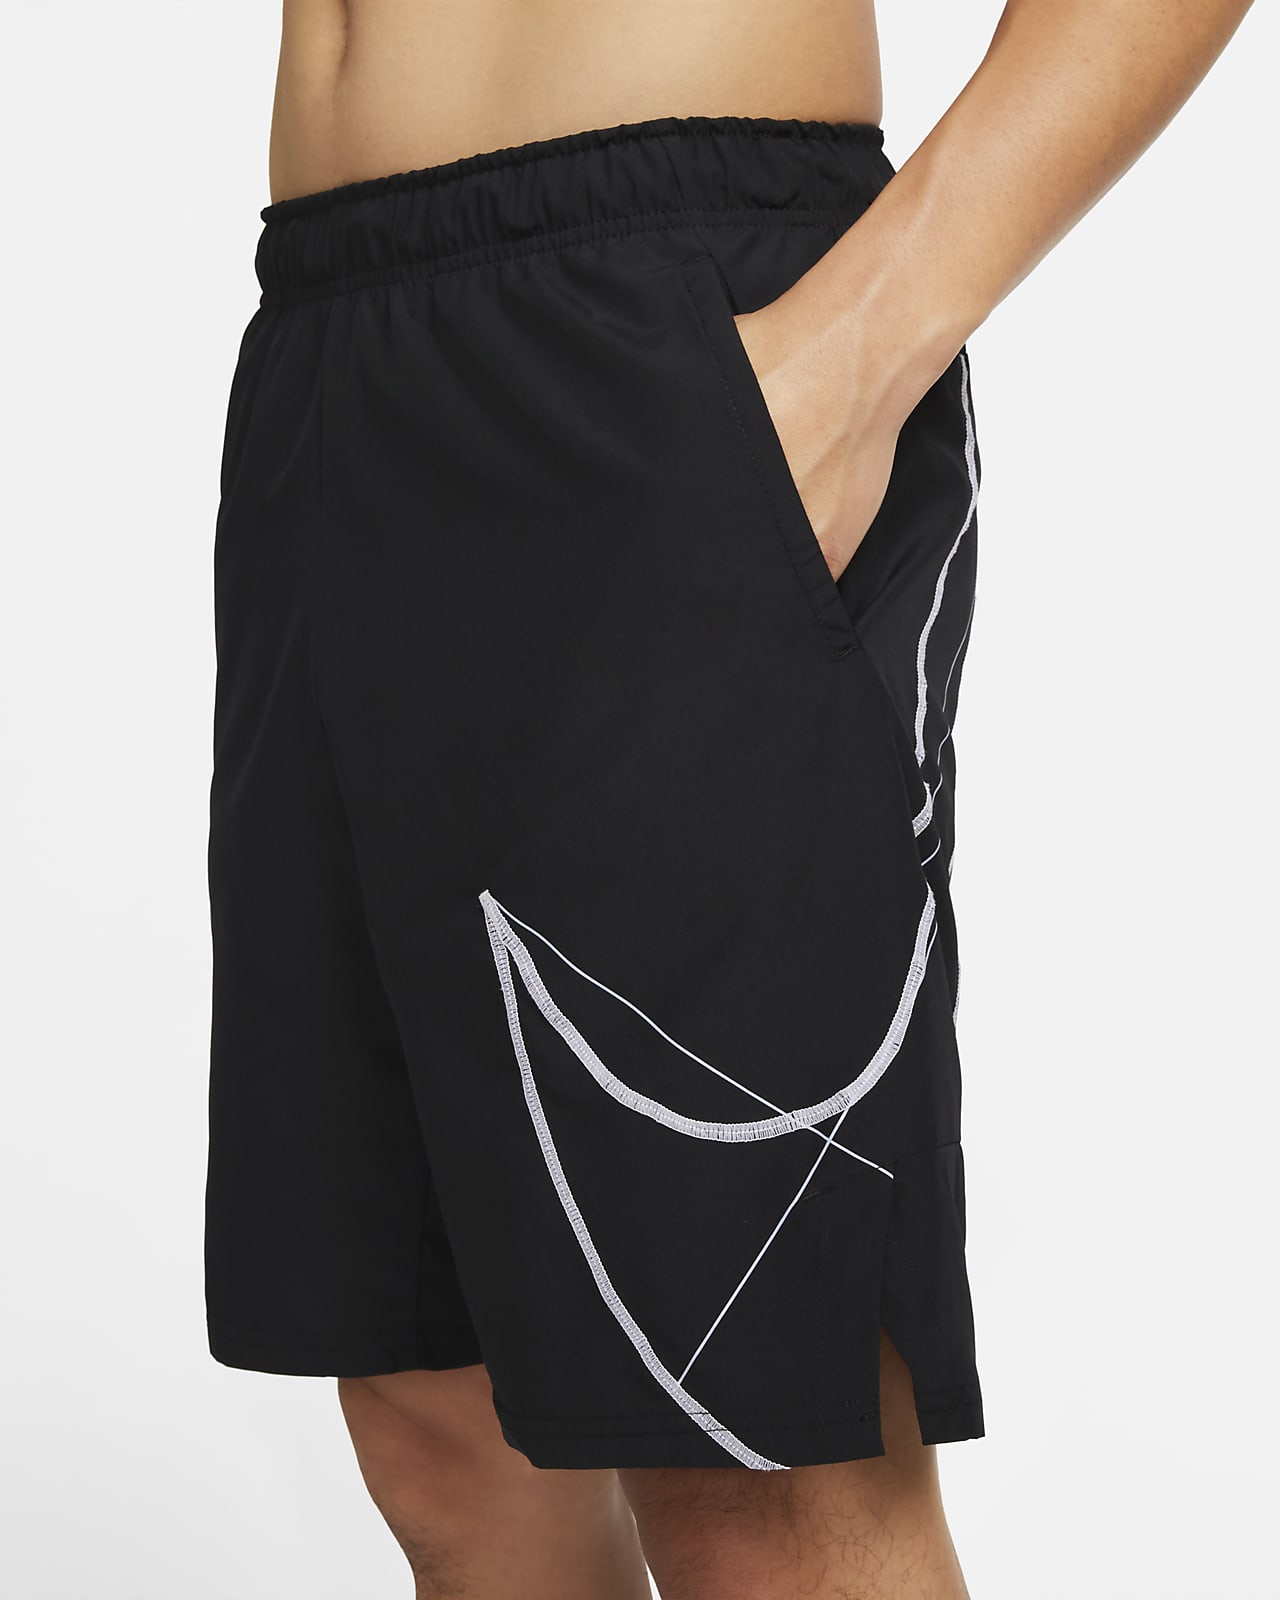 Shop Dri-fit Flex Woven 9 In Short by Nike online in Qatar